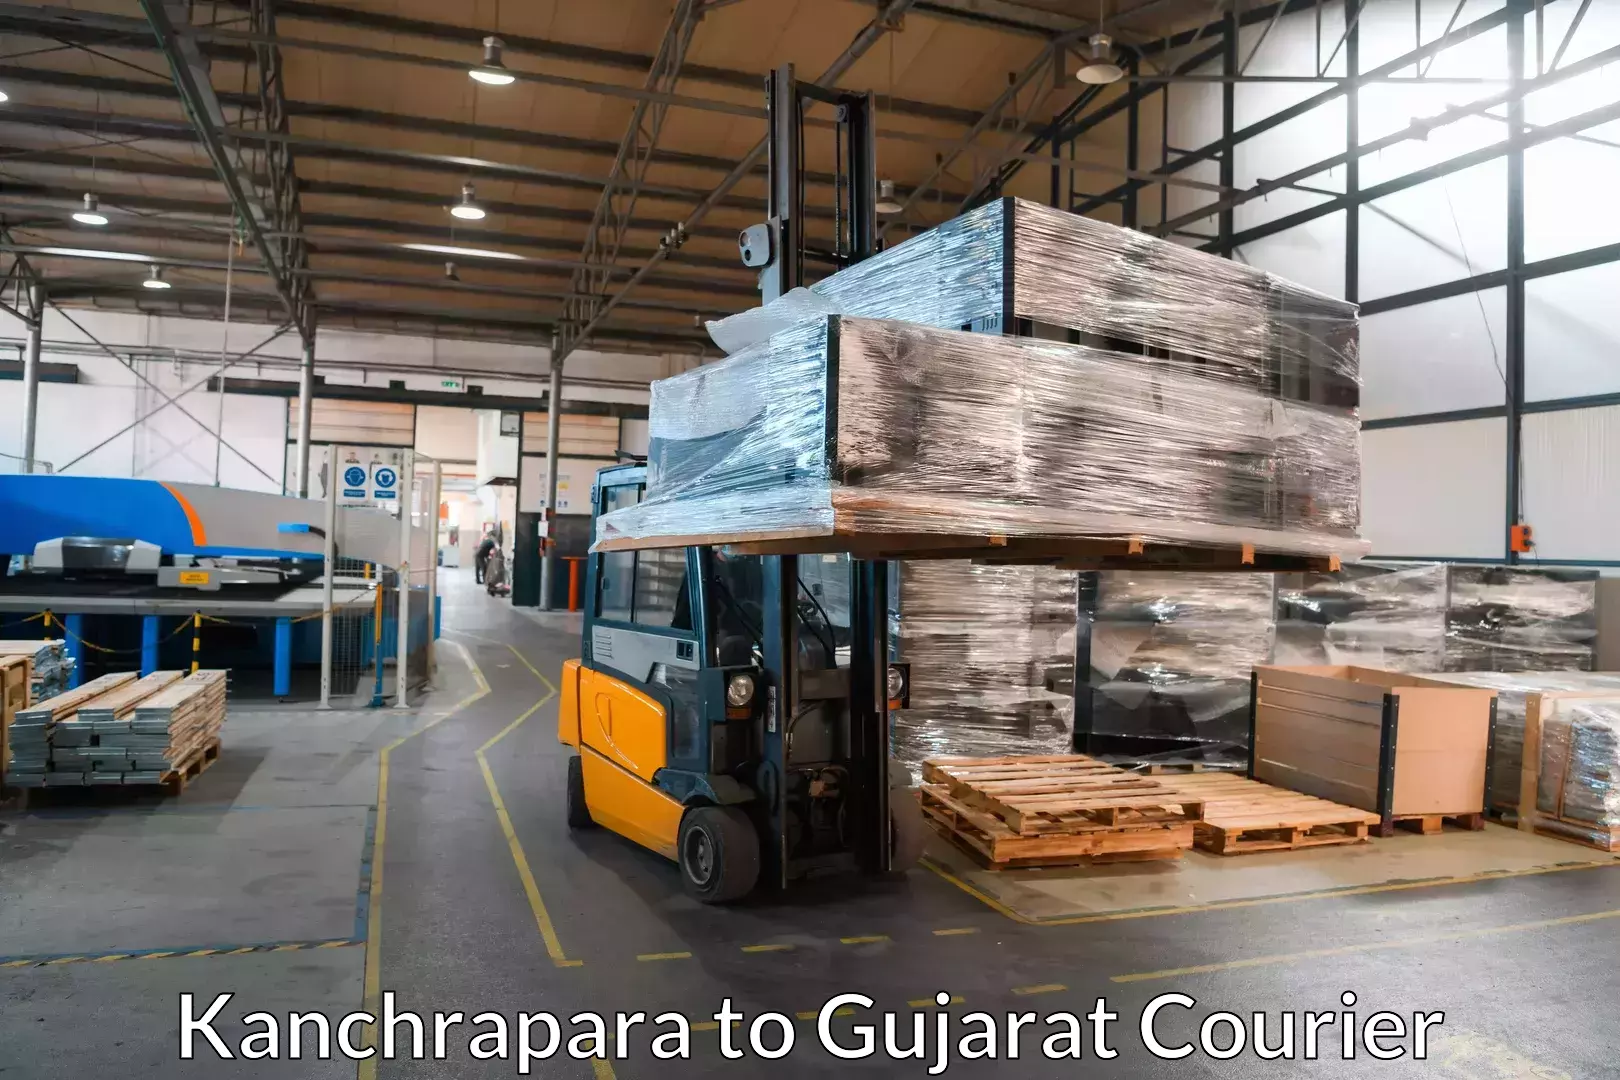 Trusted moving company Kanchrapara to Kadodara